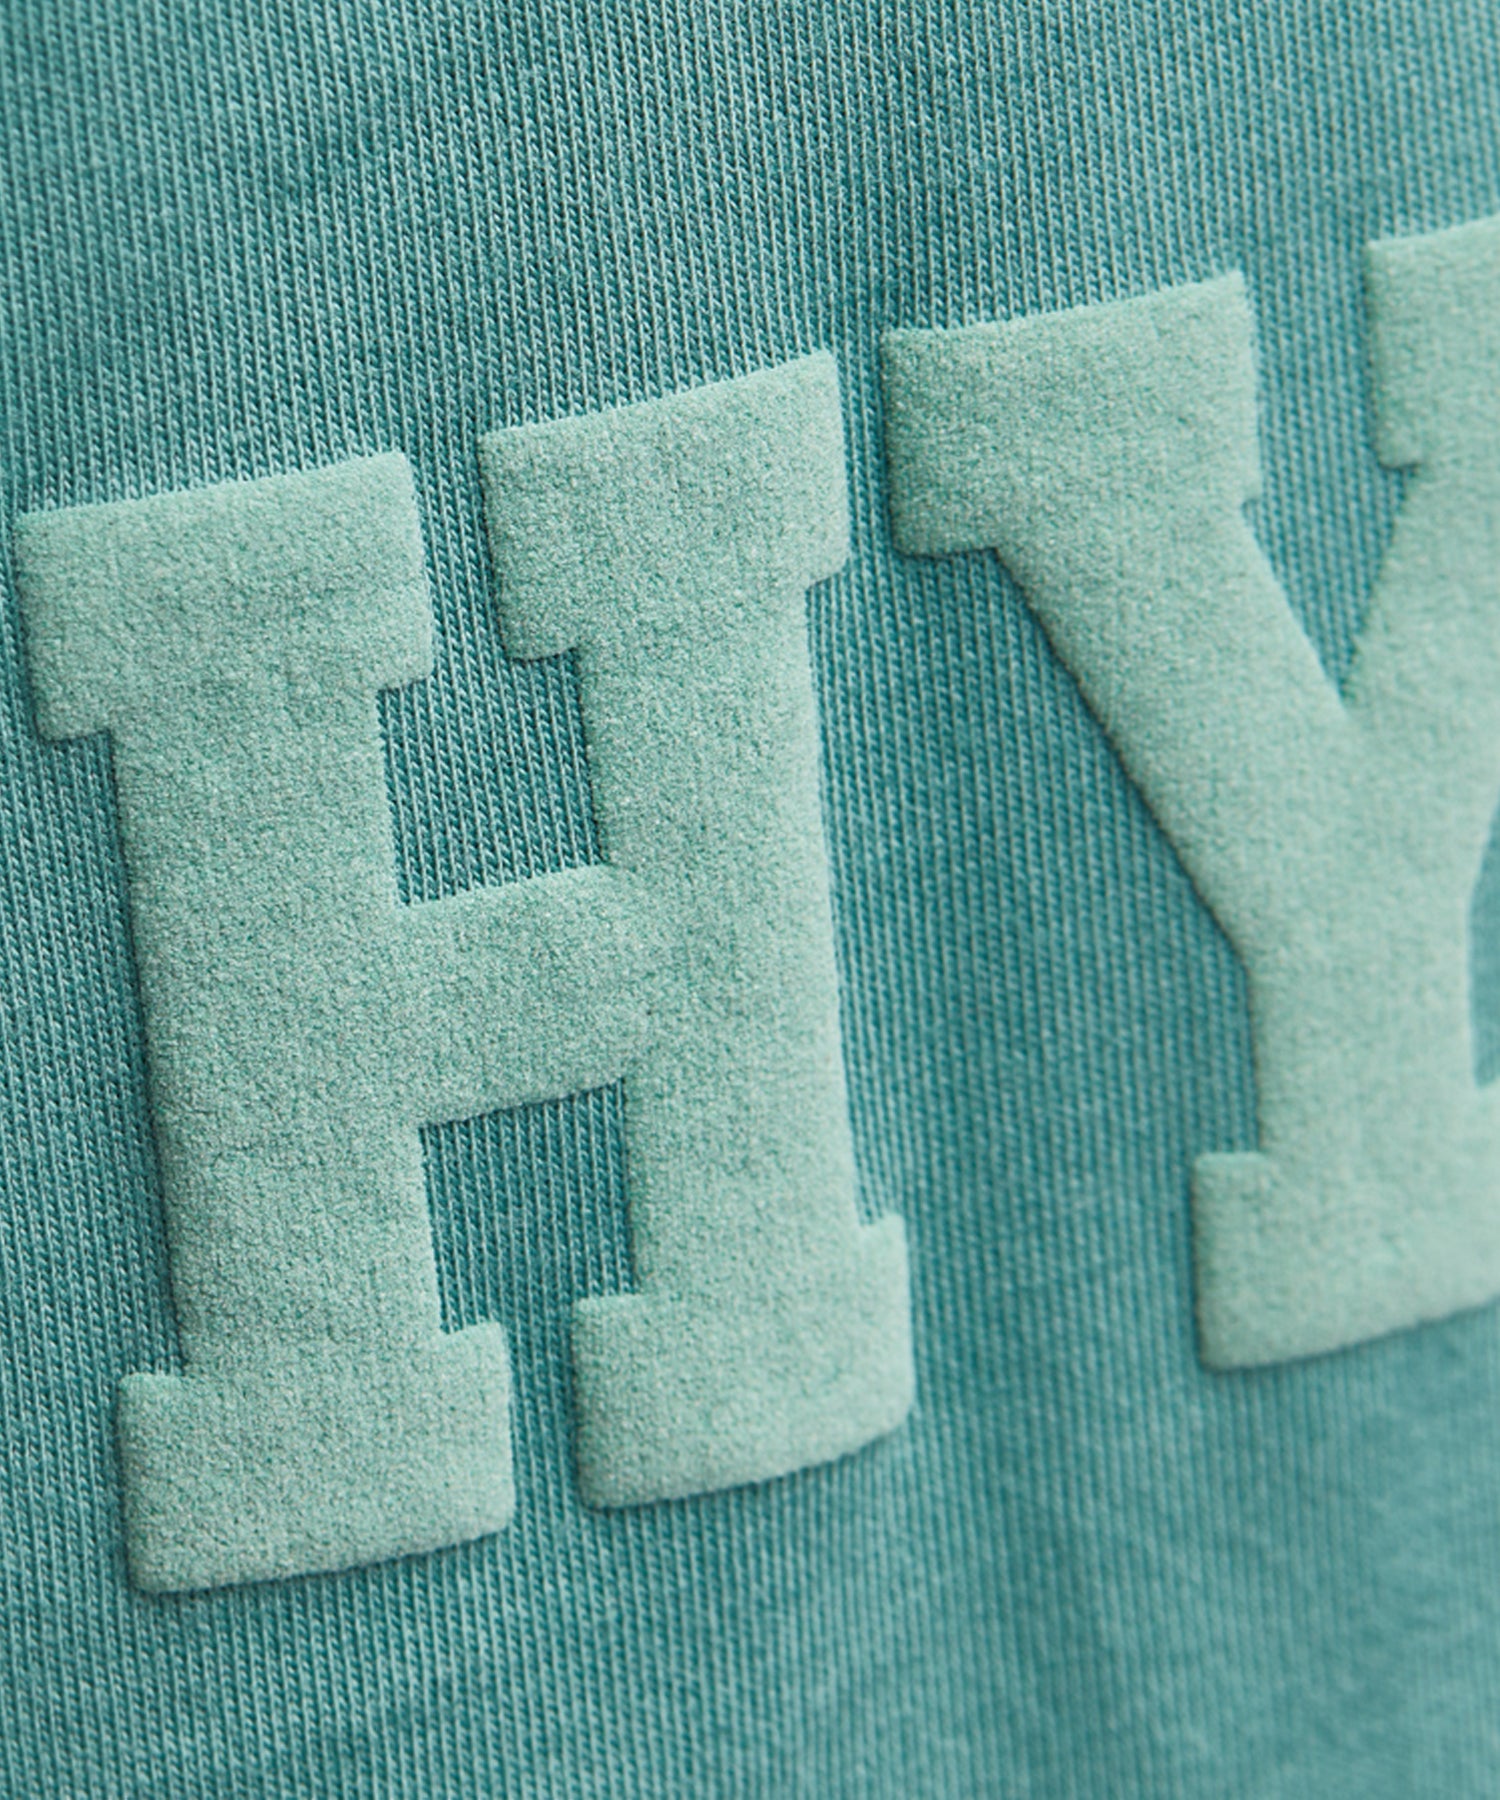 hydroponic-camiseta-puff-charcoal-jade-white-manga corta-color gris jade-estampado en relieve-100% Algodón - 160gr.